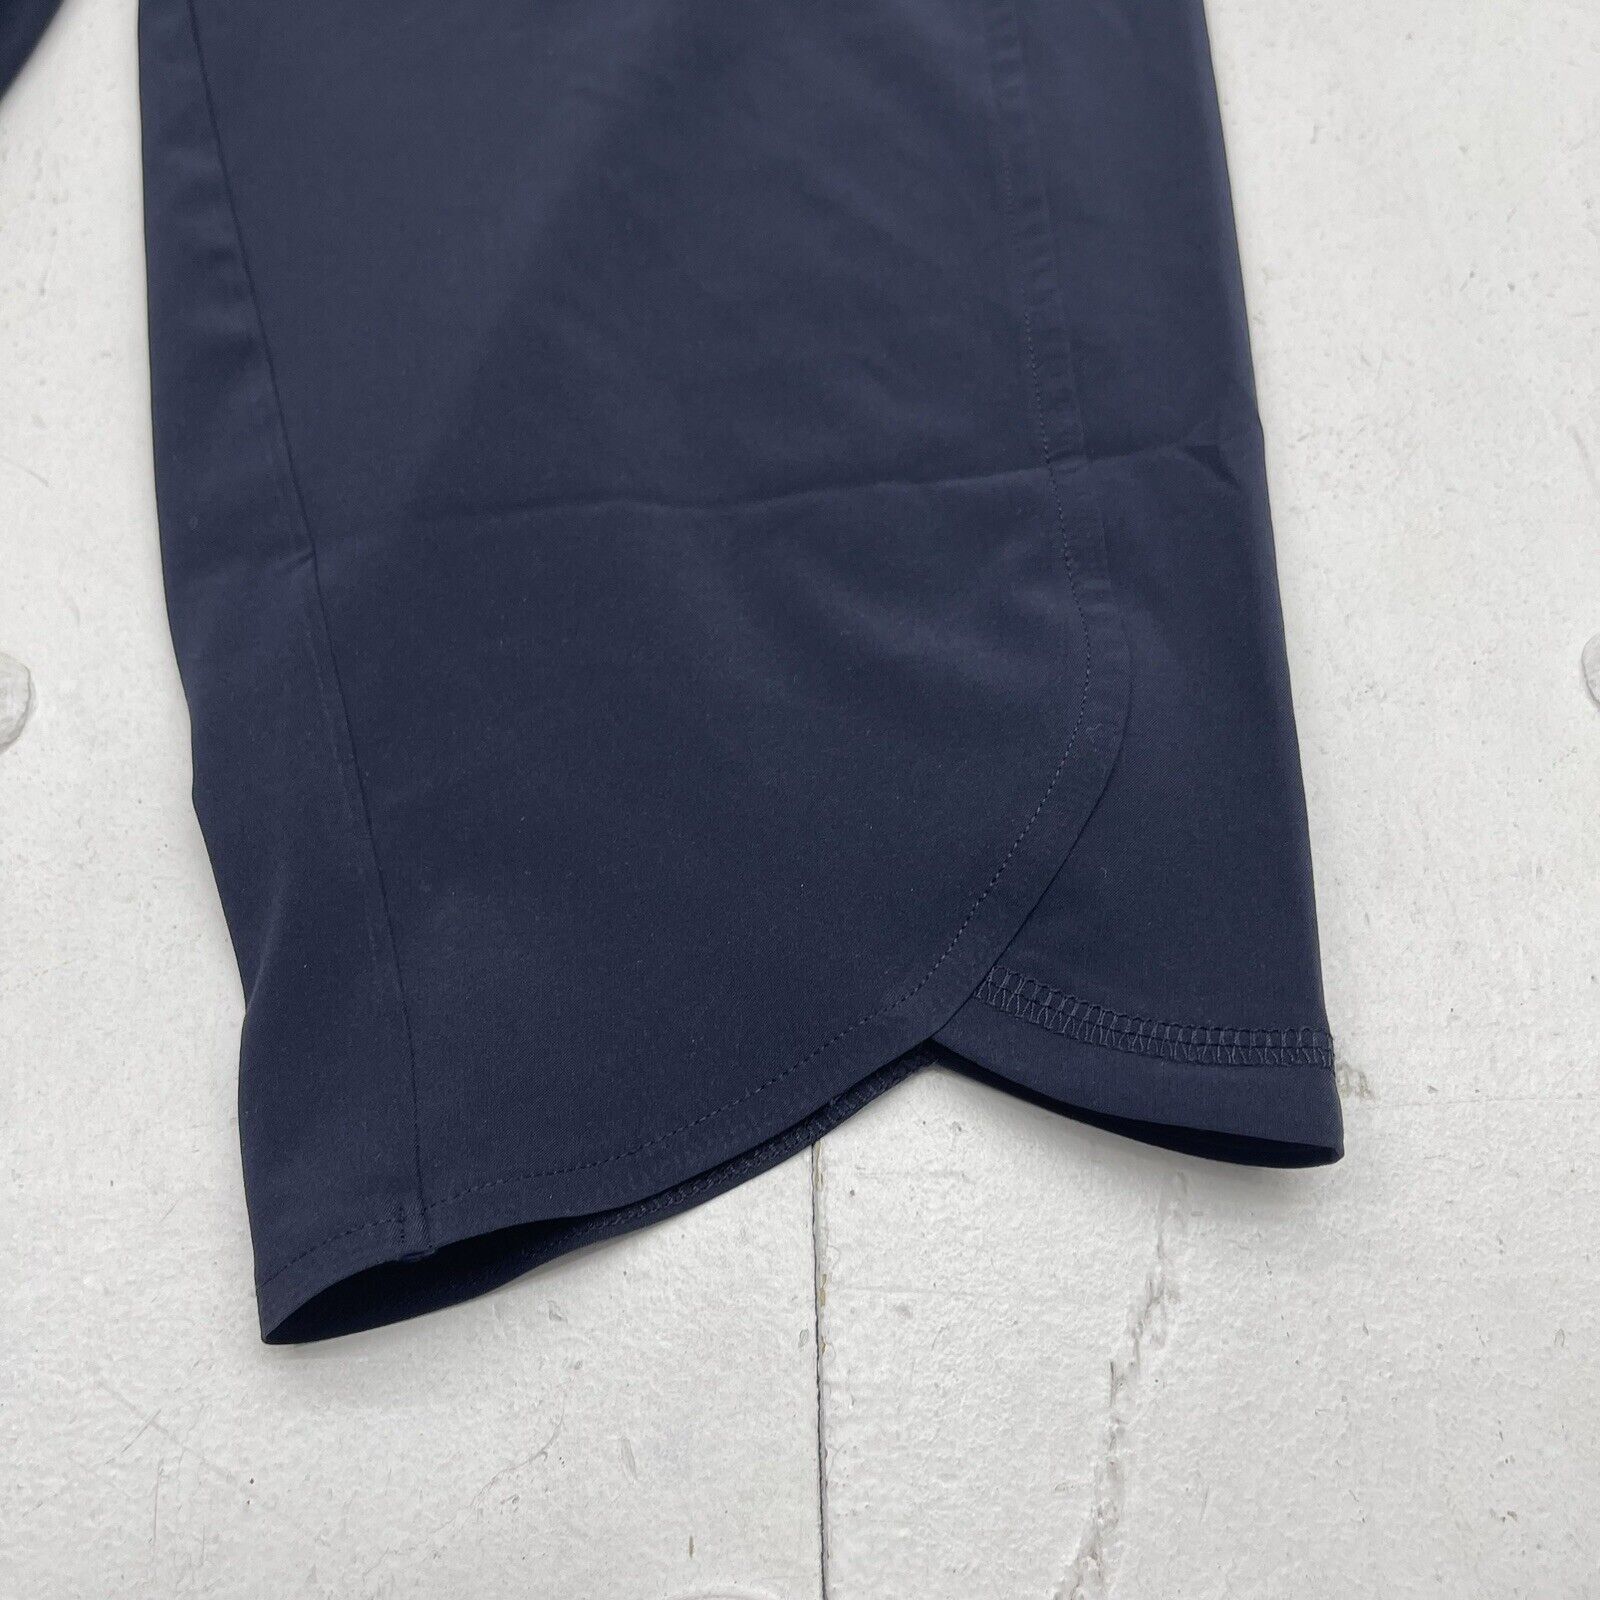 T By Talbots Navy Blue Athletic Pants Women's Size Medium Petite - beyond  exchange